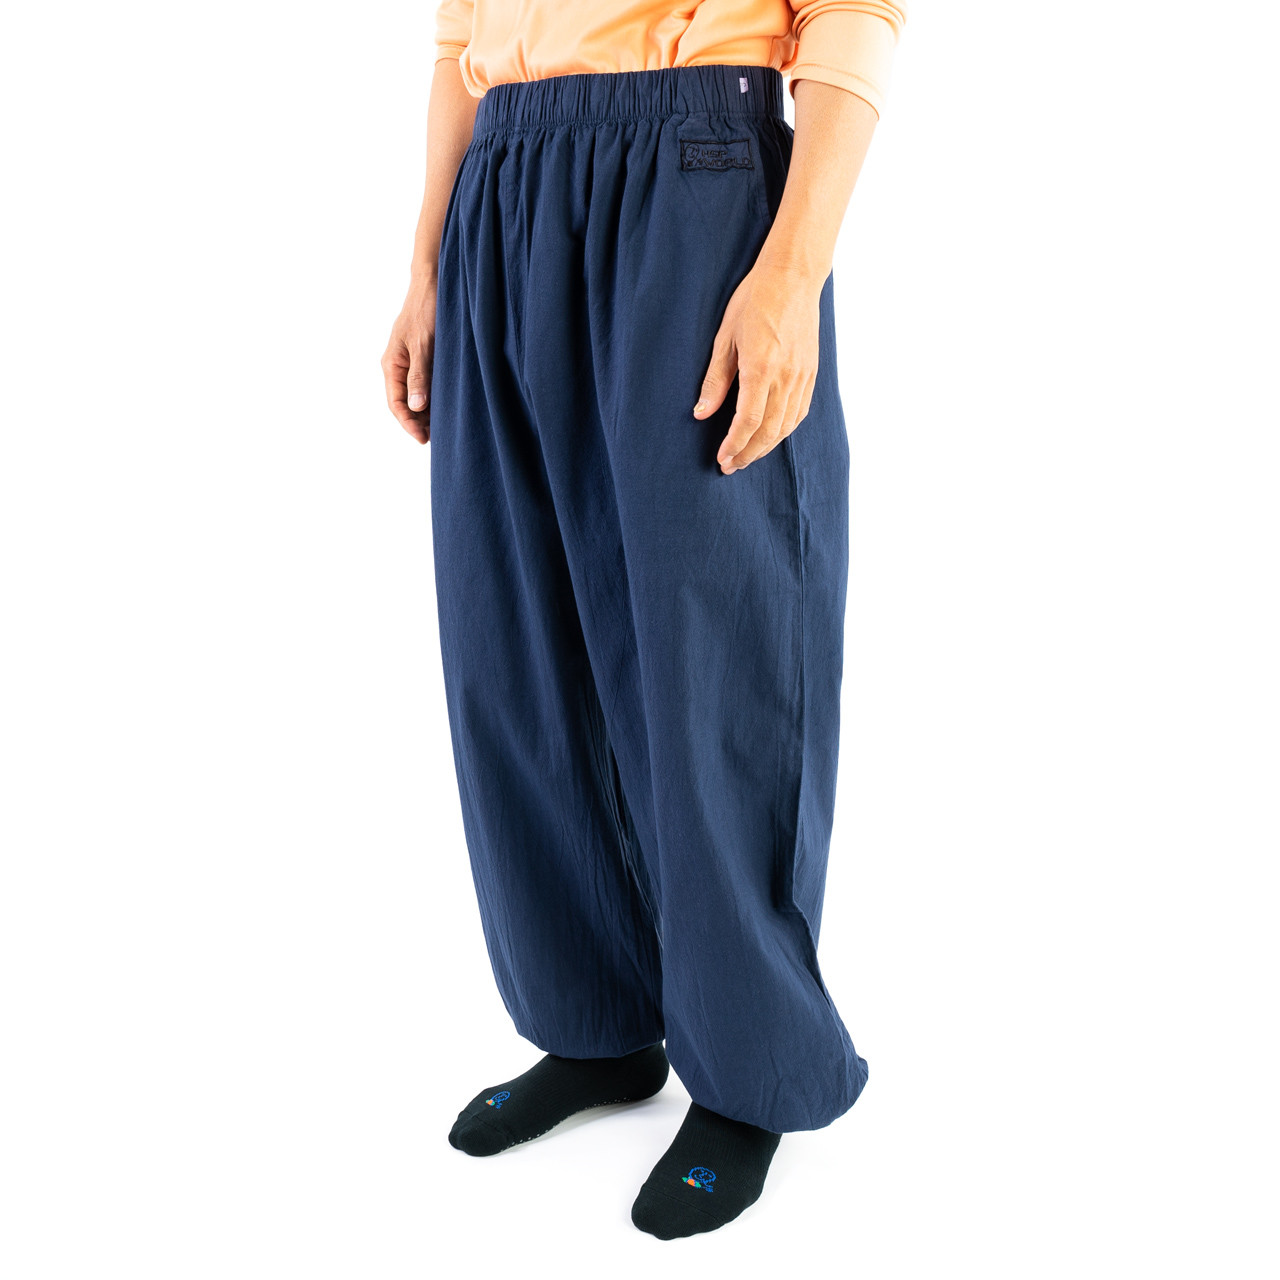 Korean Modern Hanbok Pants Daily Casual Pants Modernized  Etsy  Modern  hanbok Japan fashion casual Casual sporty outfits